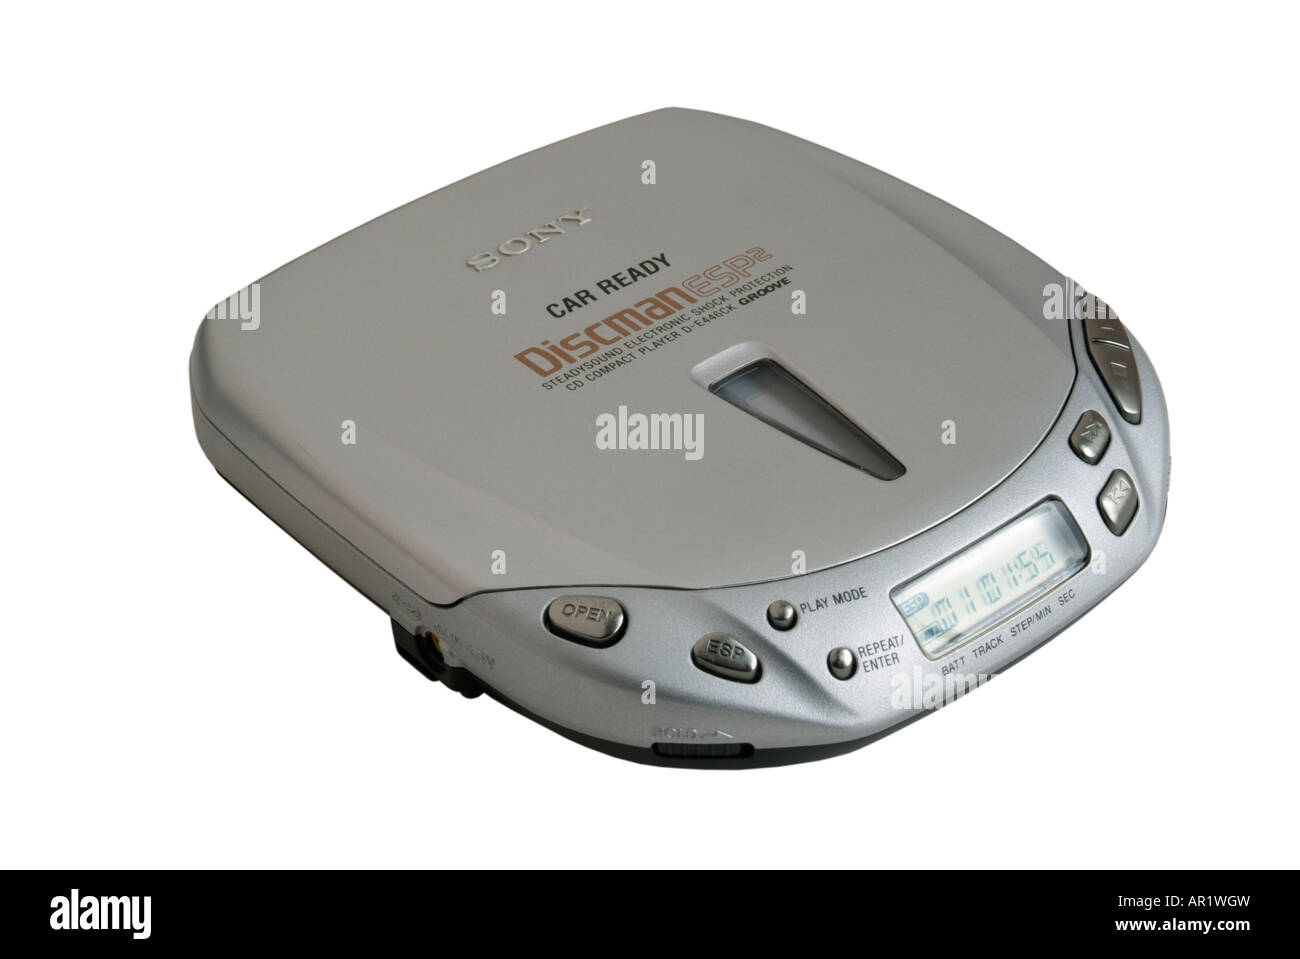  Sony Discman CD Compact Player D-133 : Electrónica